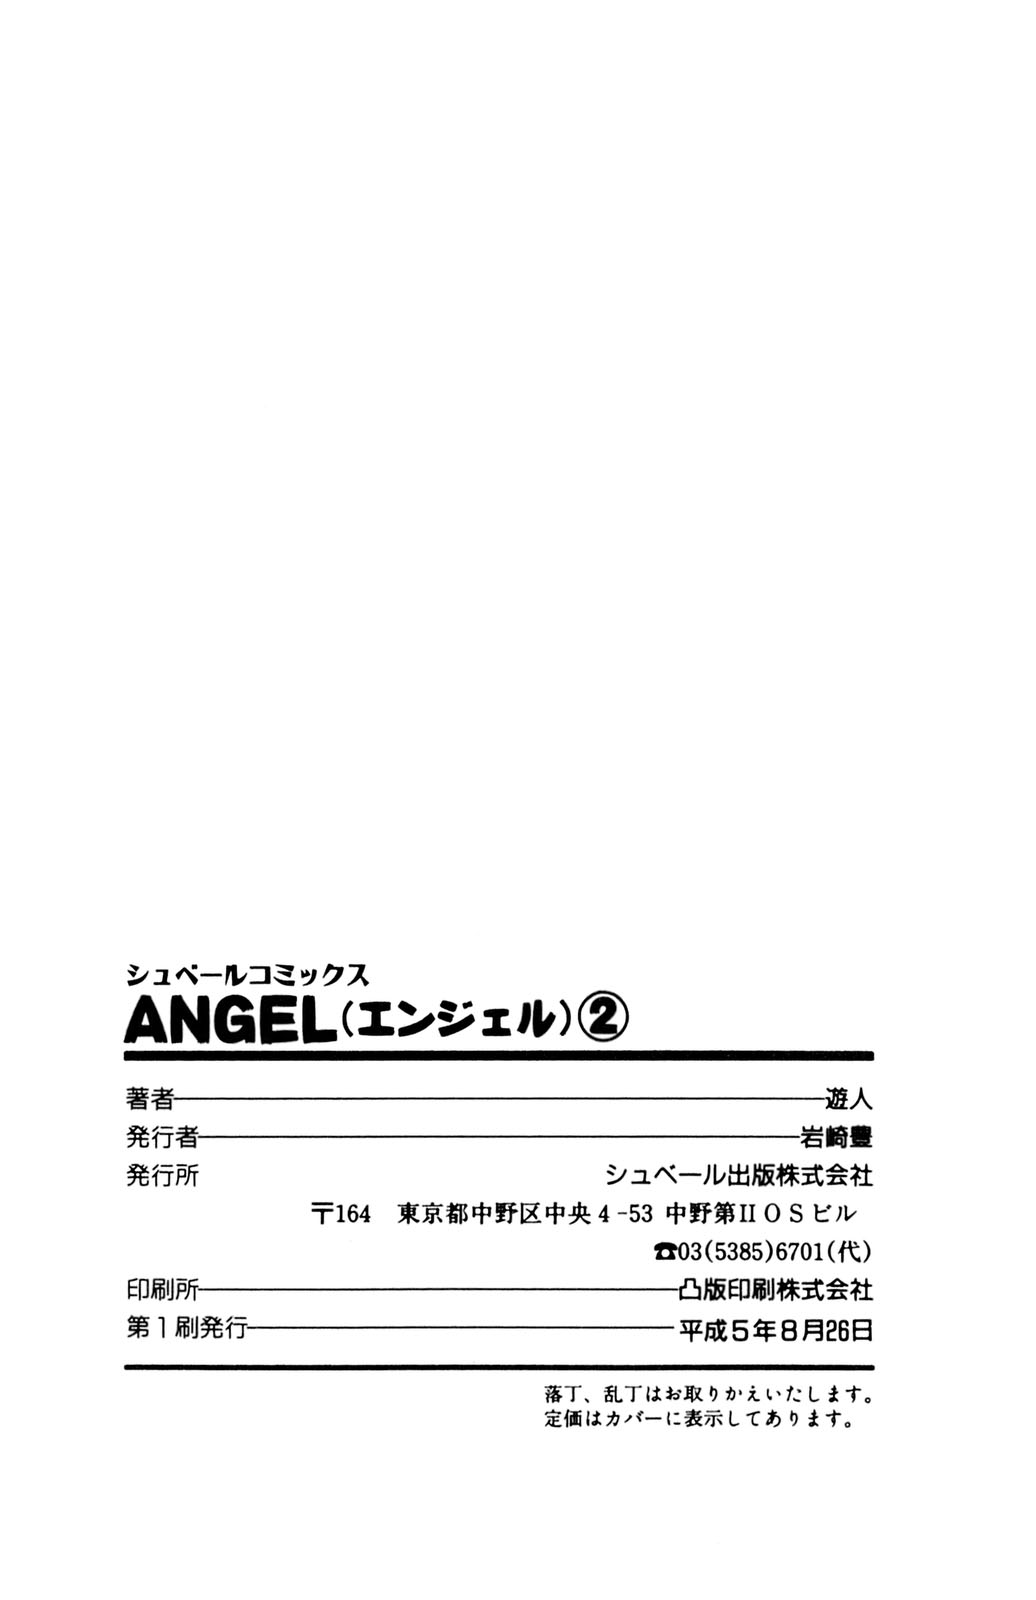 [U-Jin] ANGEL 2 [遊人] ANGEL 2